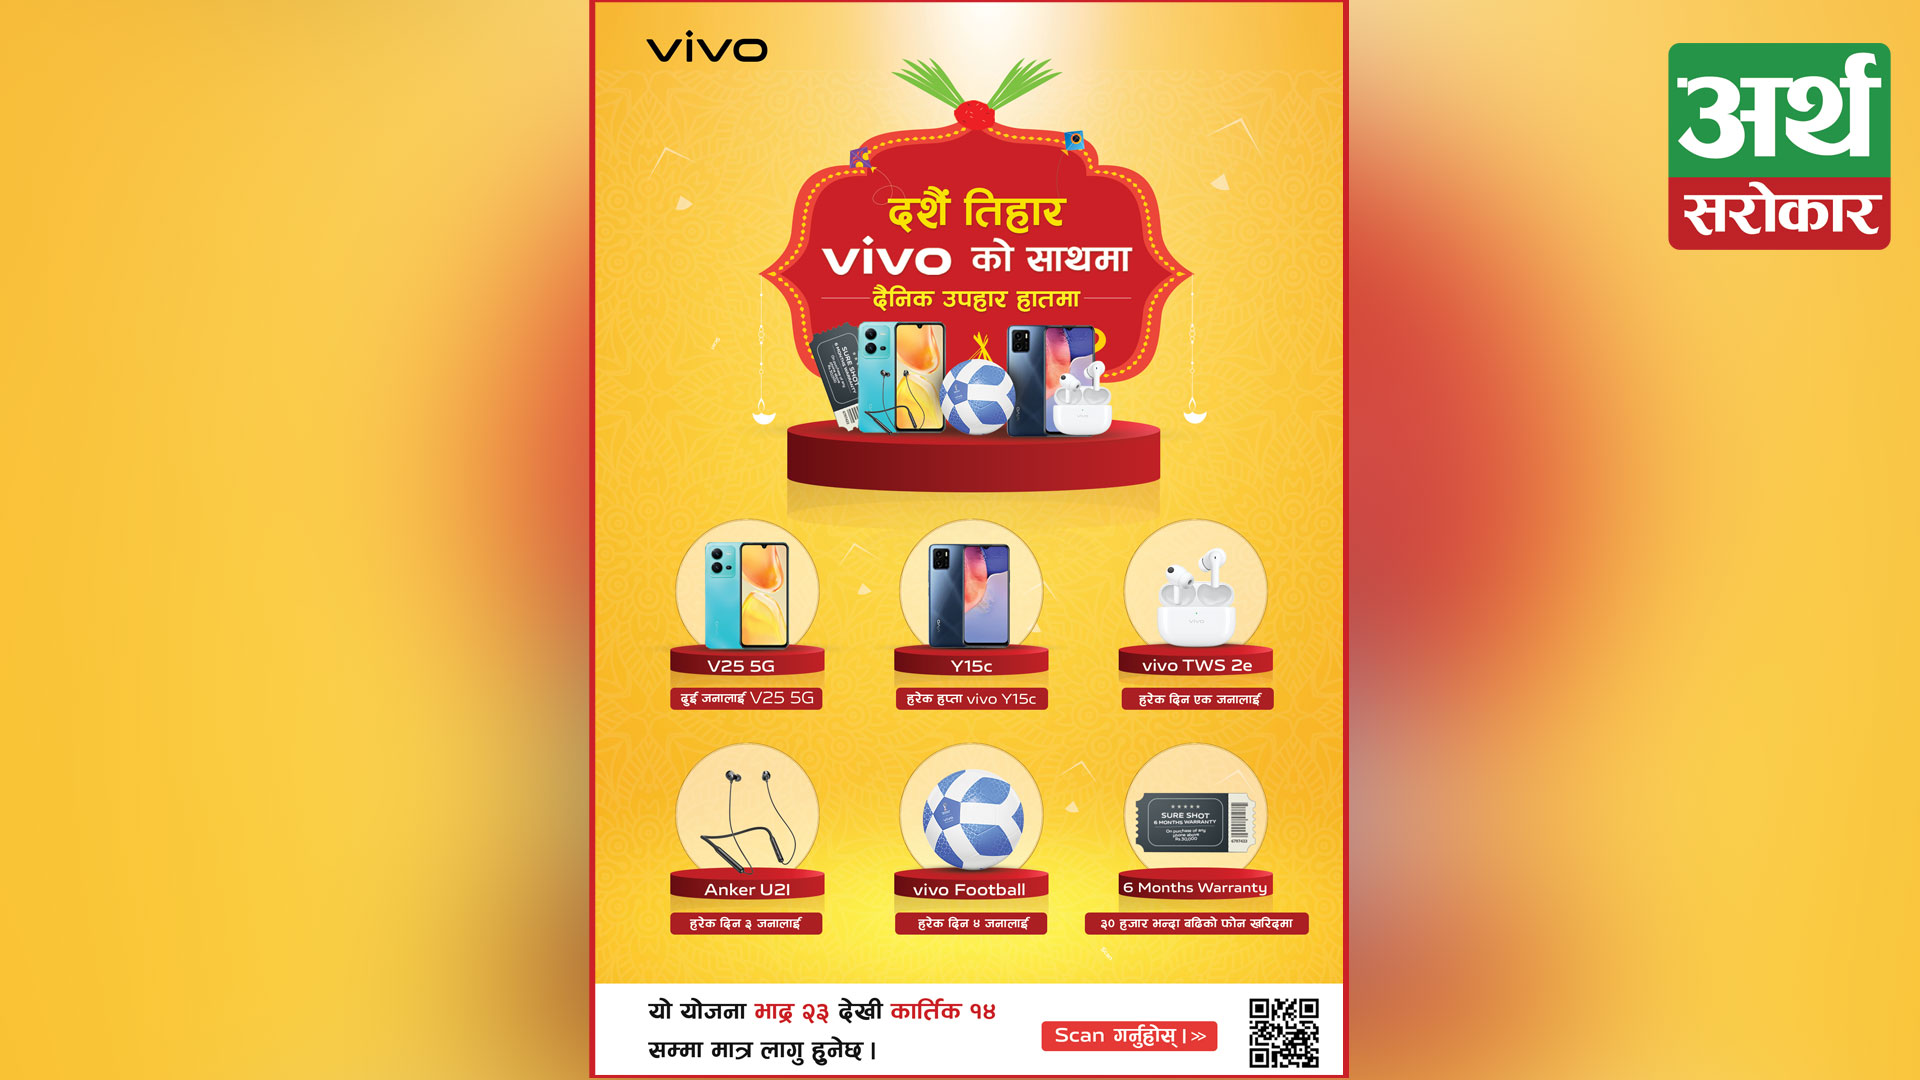 vivo announces ‘Dashain Tihar vivo Ko Saathma, Dainik Upahar Haatma’ with exciting gifts and vouchers